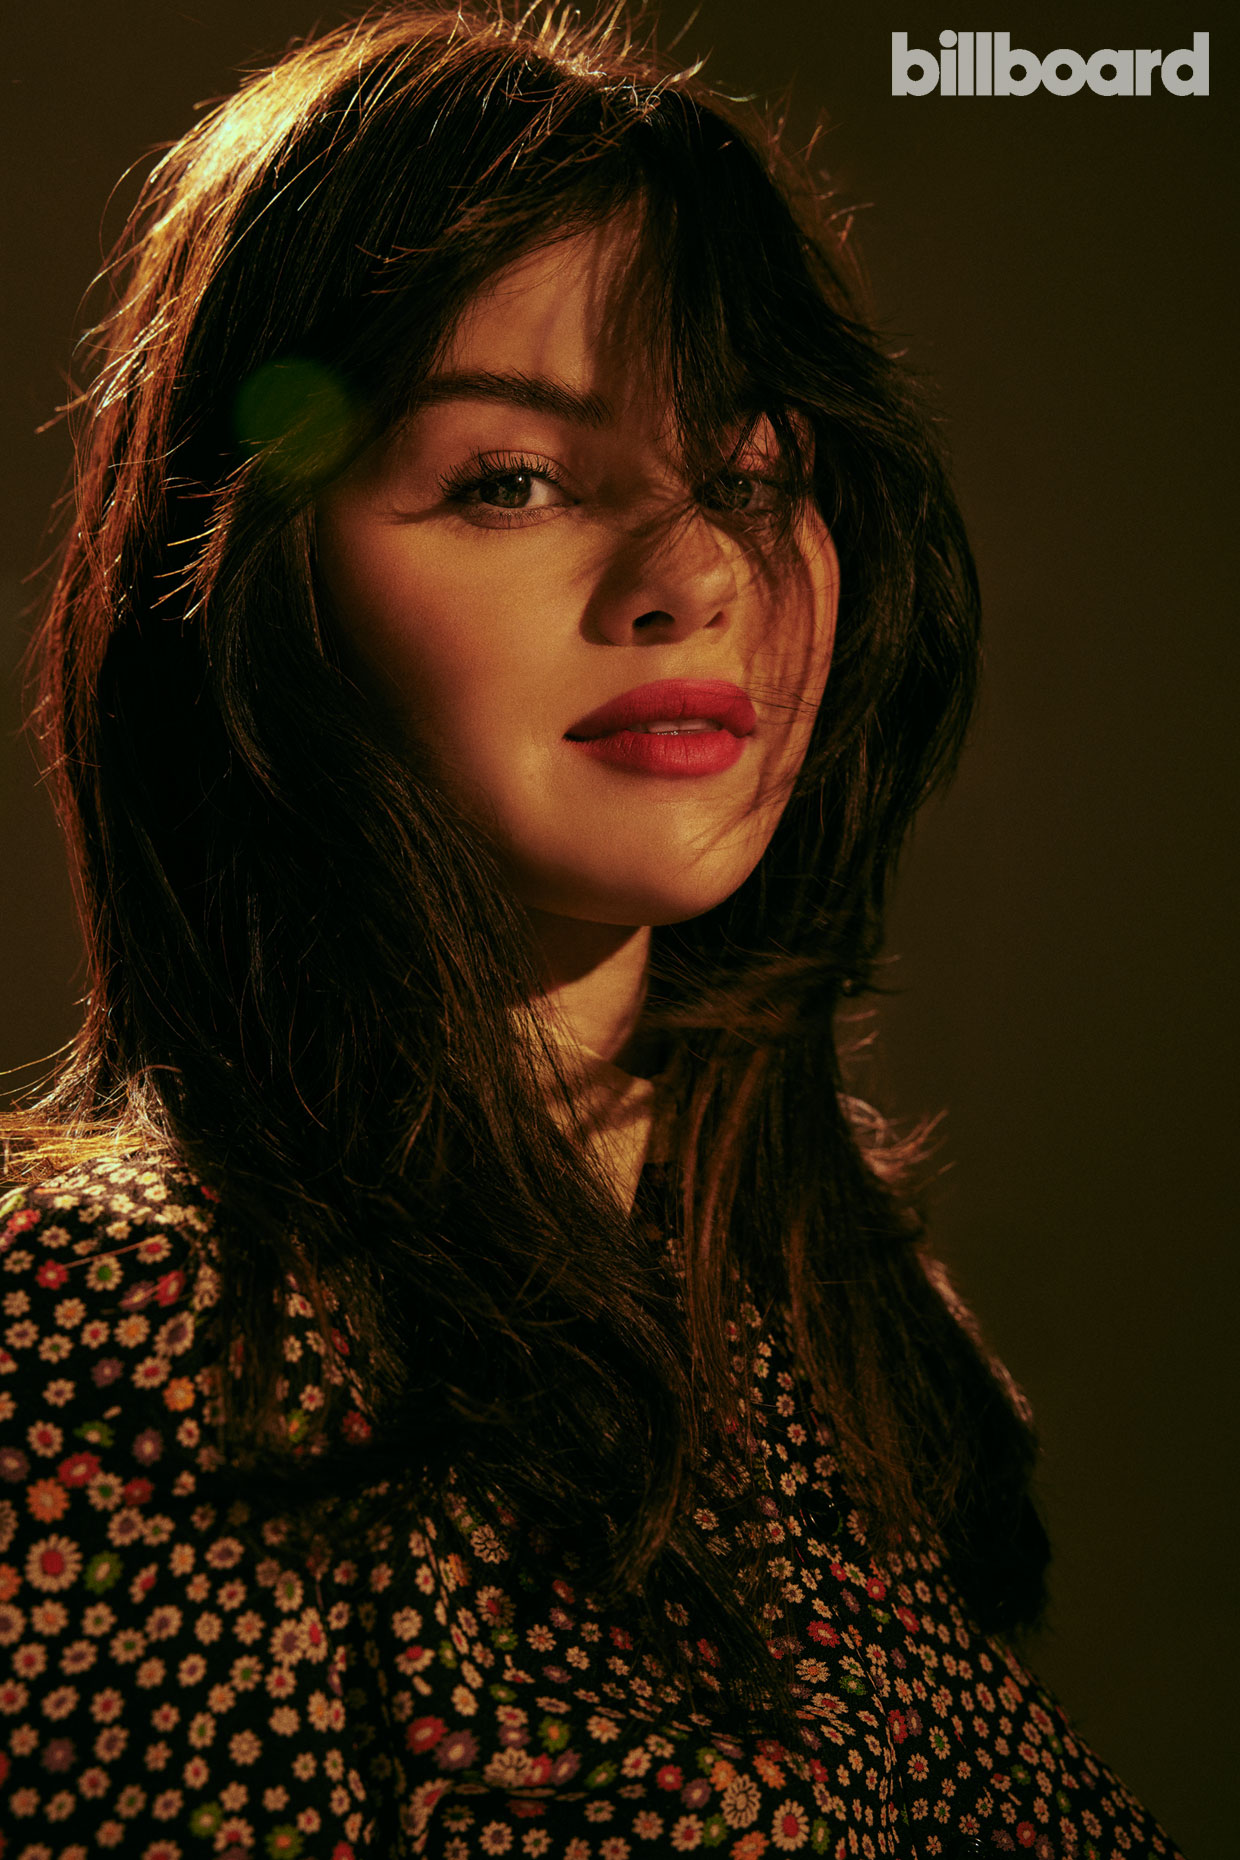 Selena Gomez Billboard Women Brunette Celebrity Singer Looking At Viewer Red Lipstick Portrait Displ 1240x1860